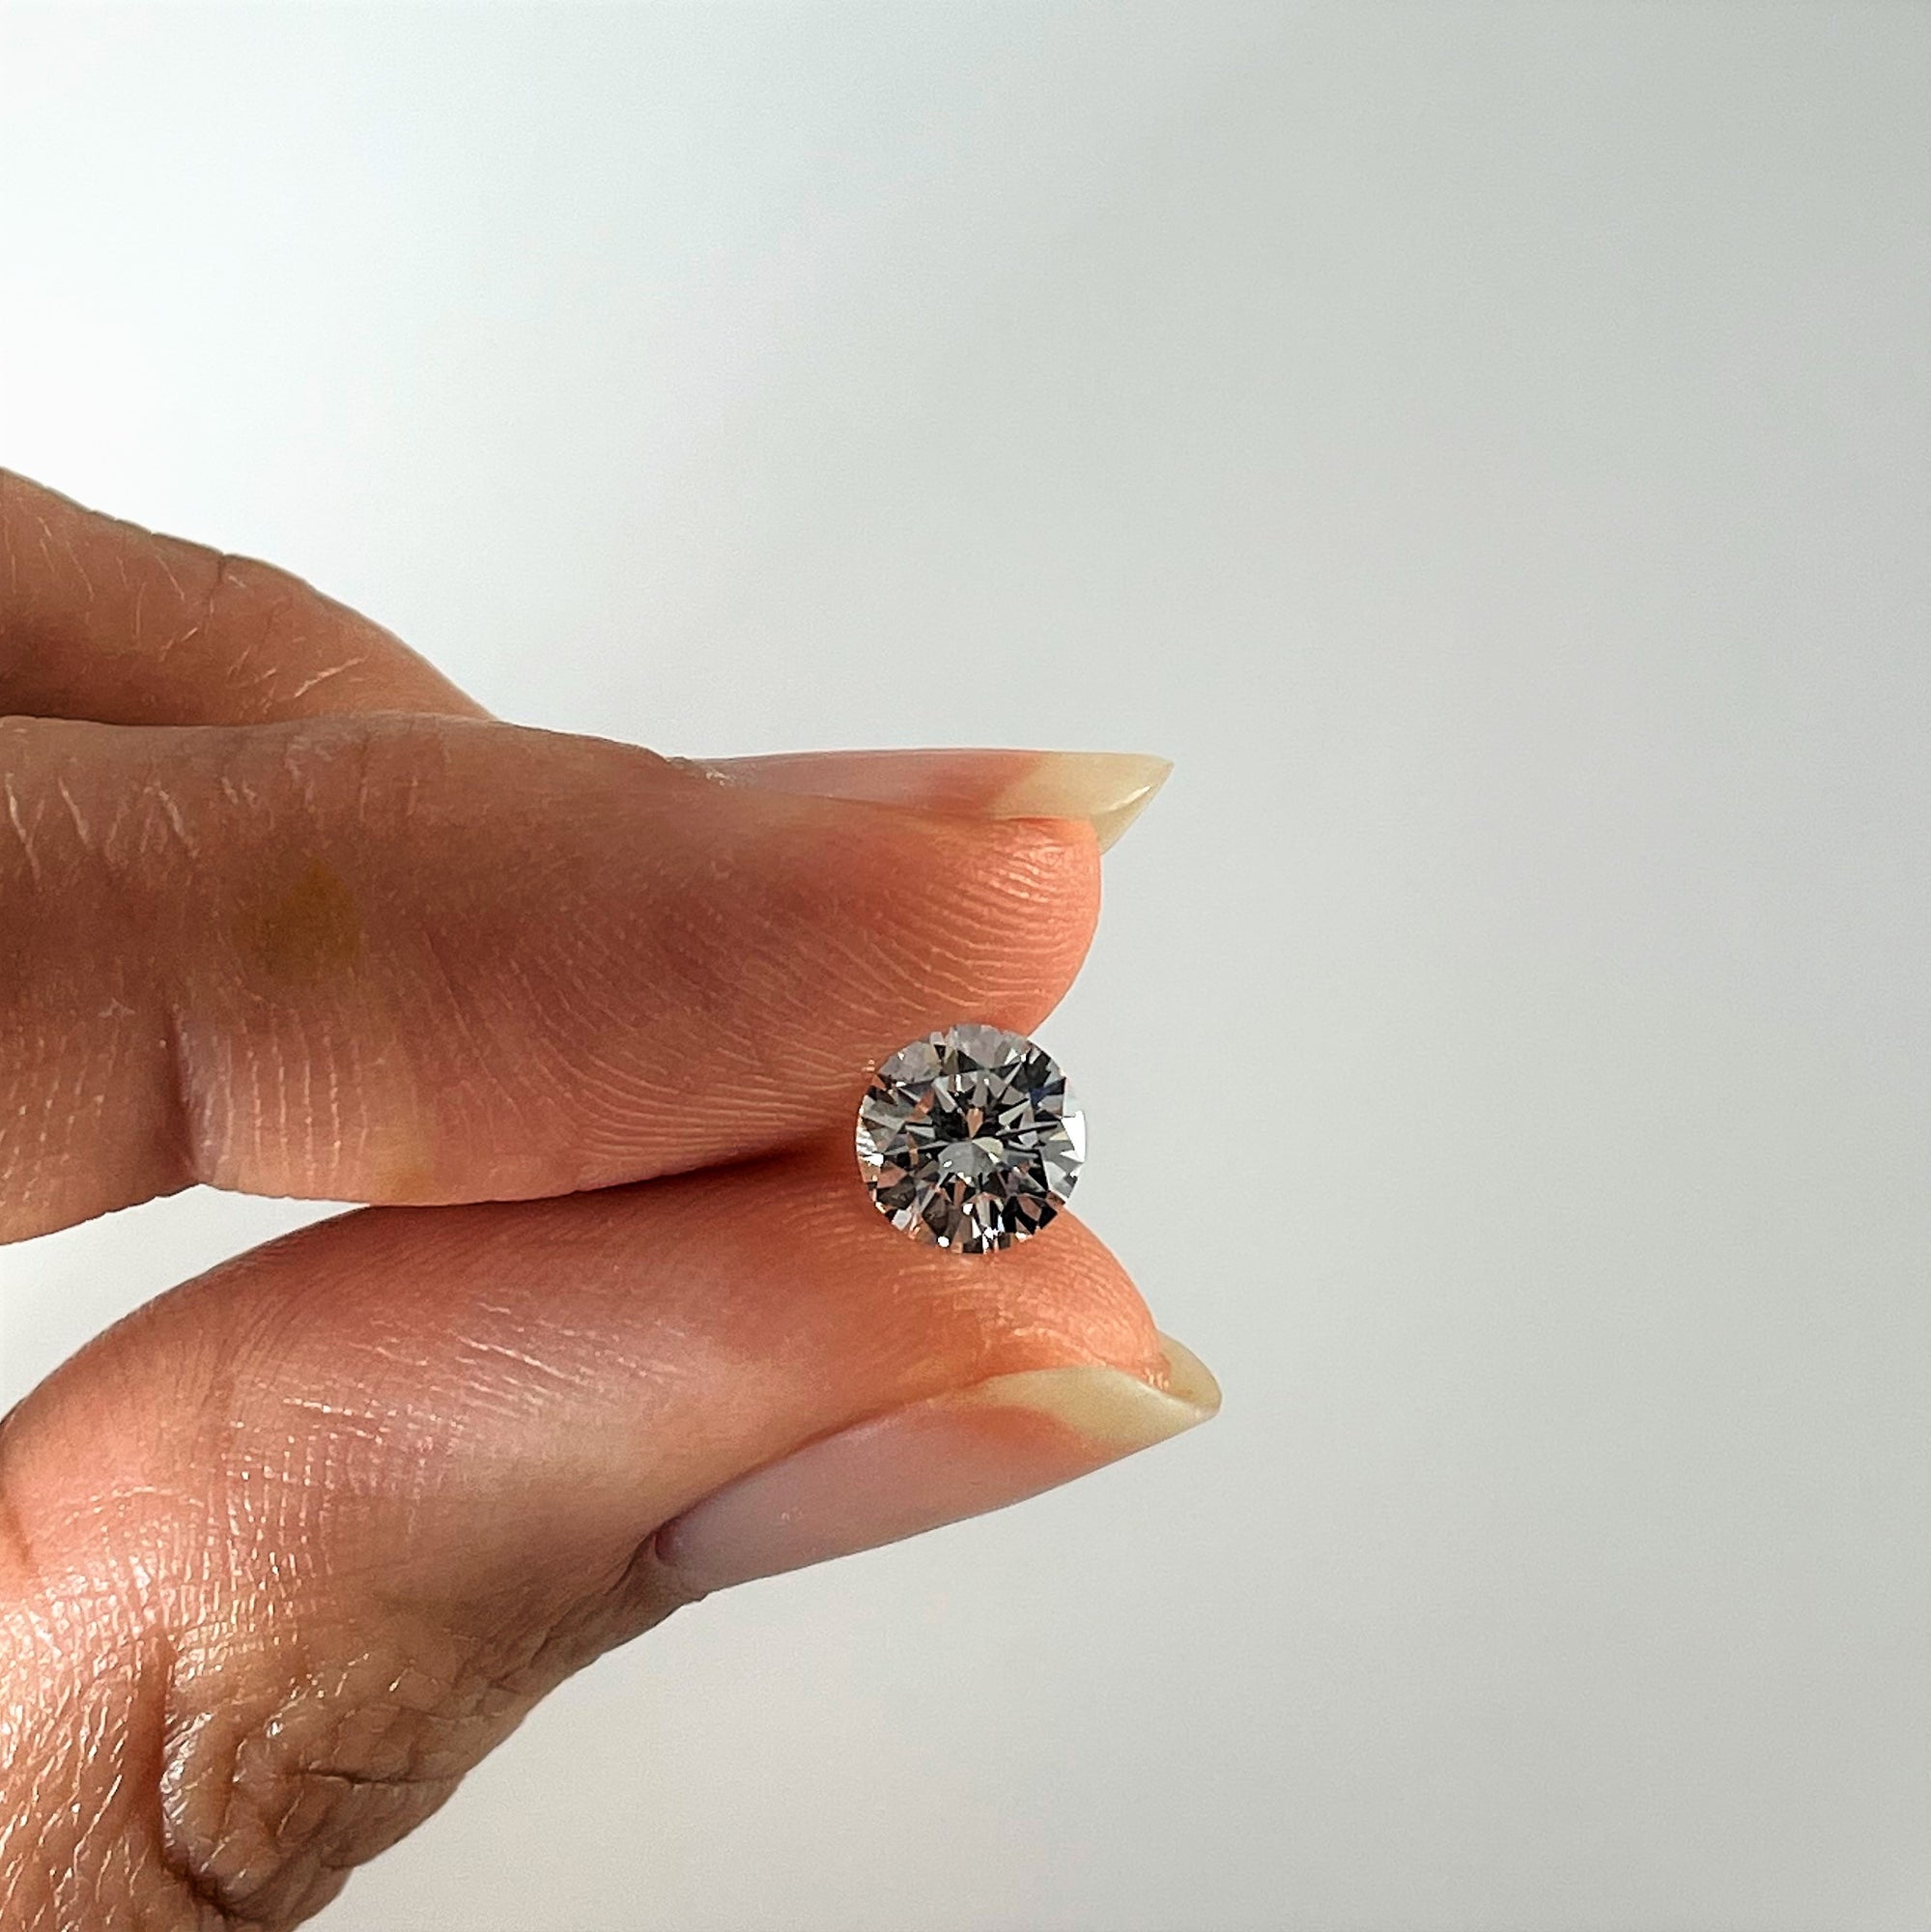 GIA Certified Round Brilliant Cut Loose Diamond | 0.78ct |